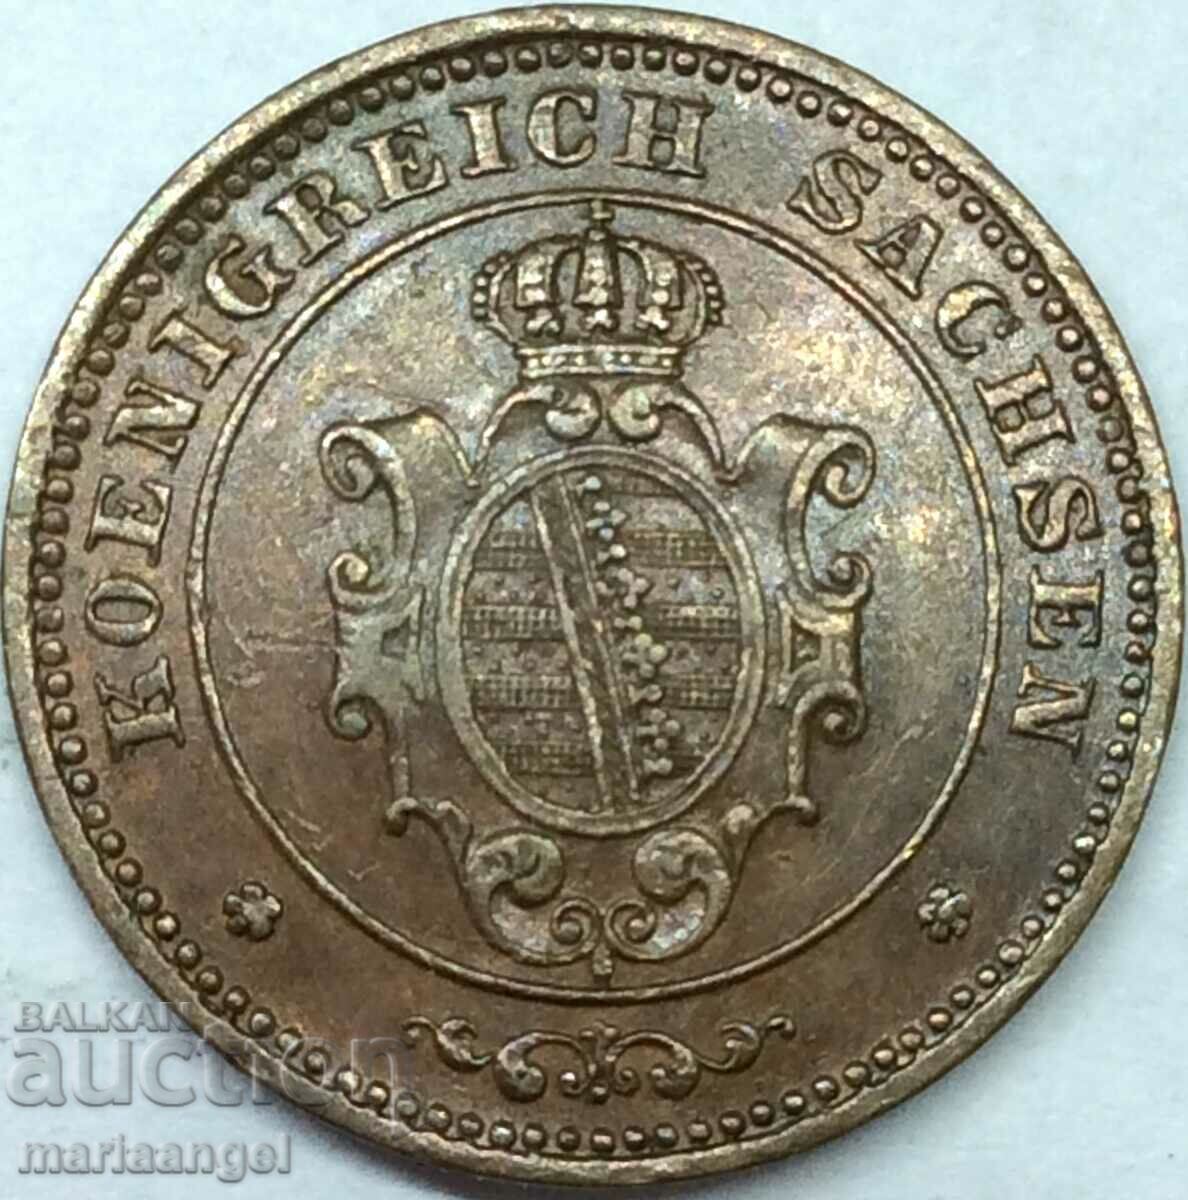 Saxony 1 pfennig 1865 Germany